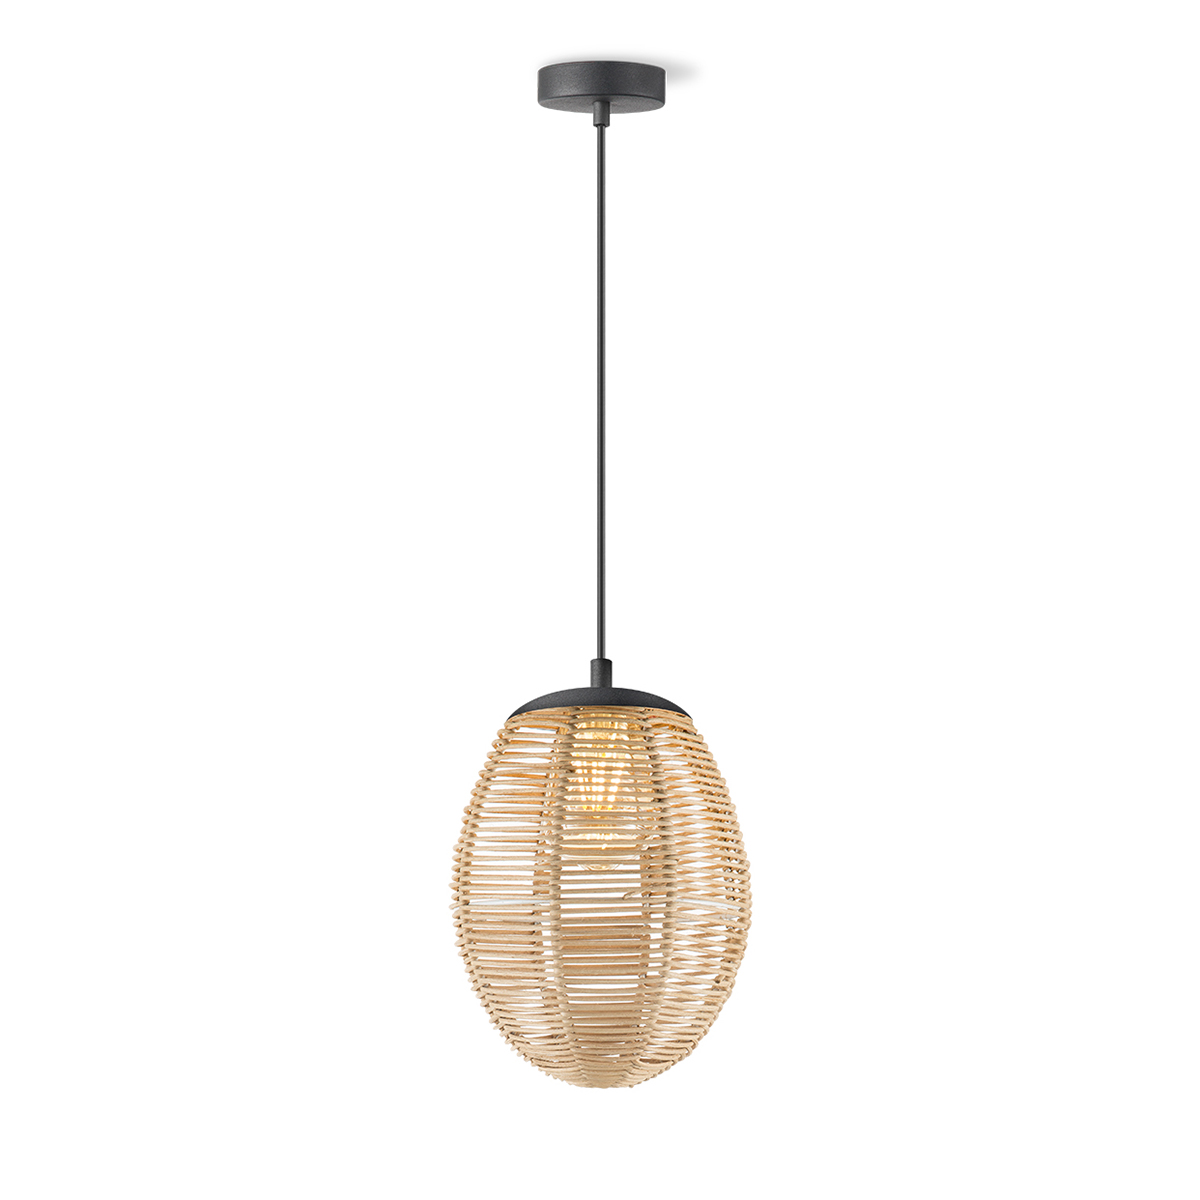 Tangla lighting - TLP4005-01BK - LED pendant lamp 1 Light - metal and cane in natural and black - large - E27